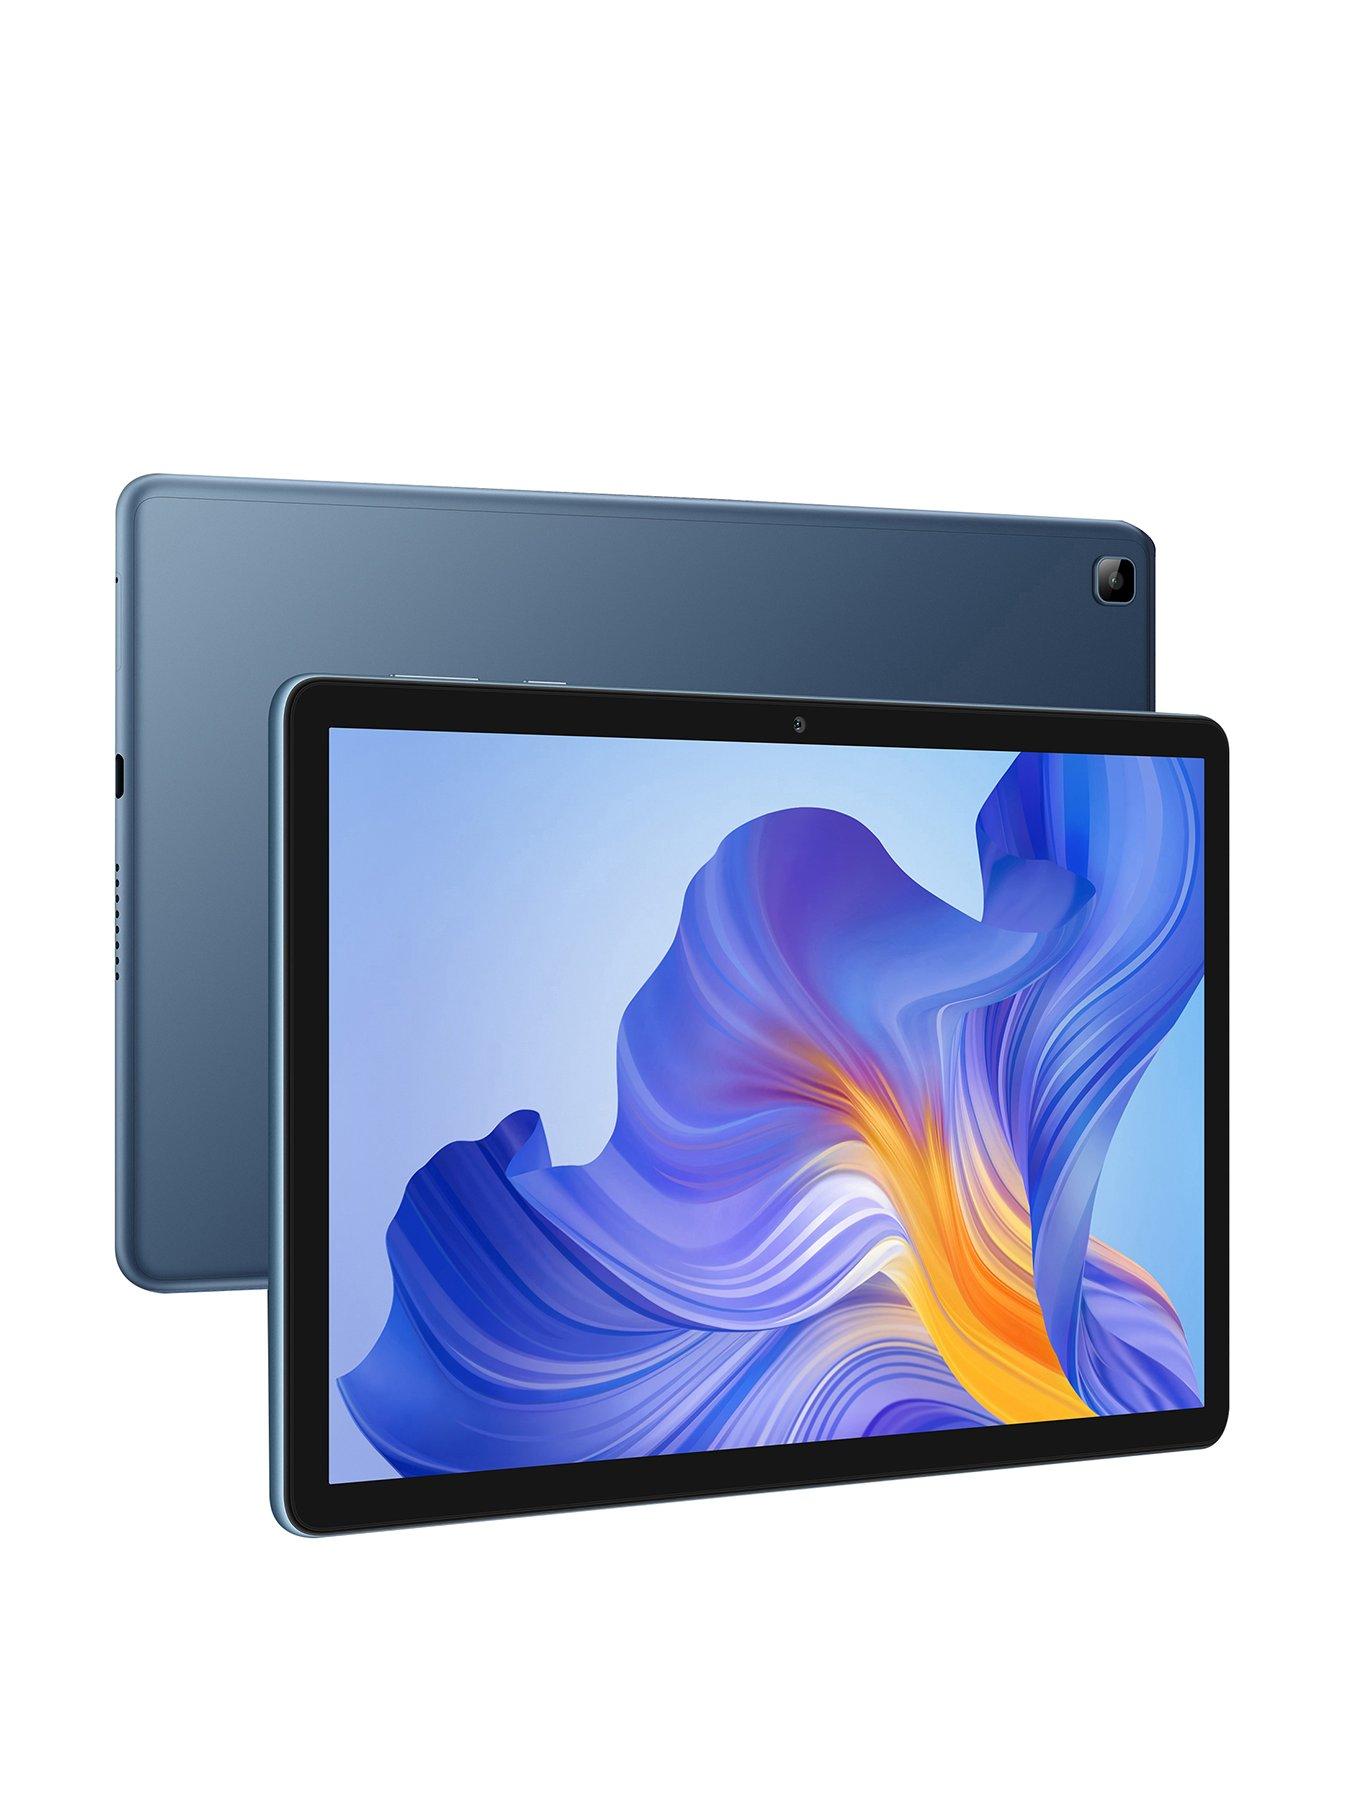 Pad X8 10.1-inch Tablet, 4GB RAM, 64GB Storage, Wi-Fi - Blue